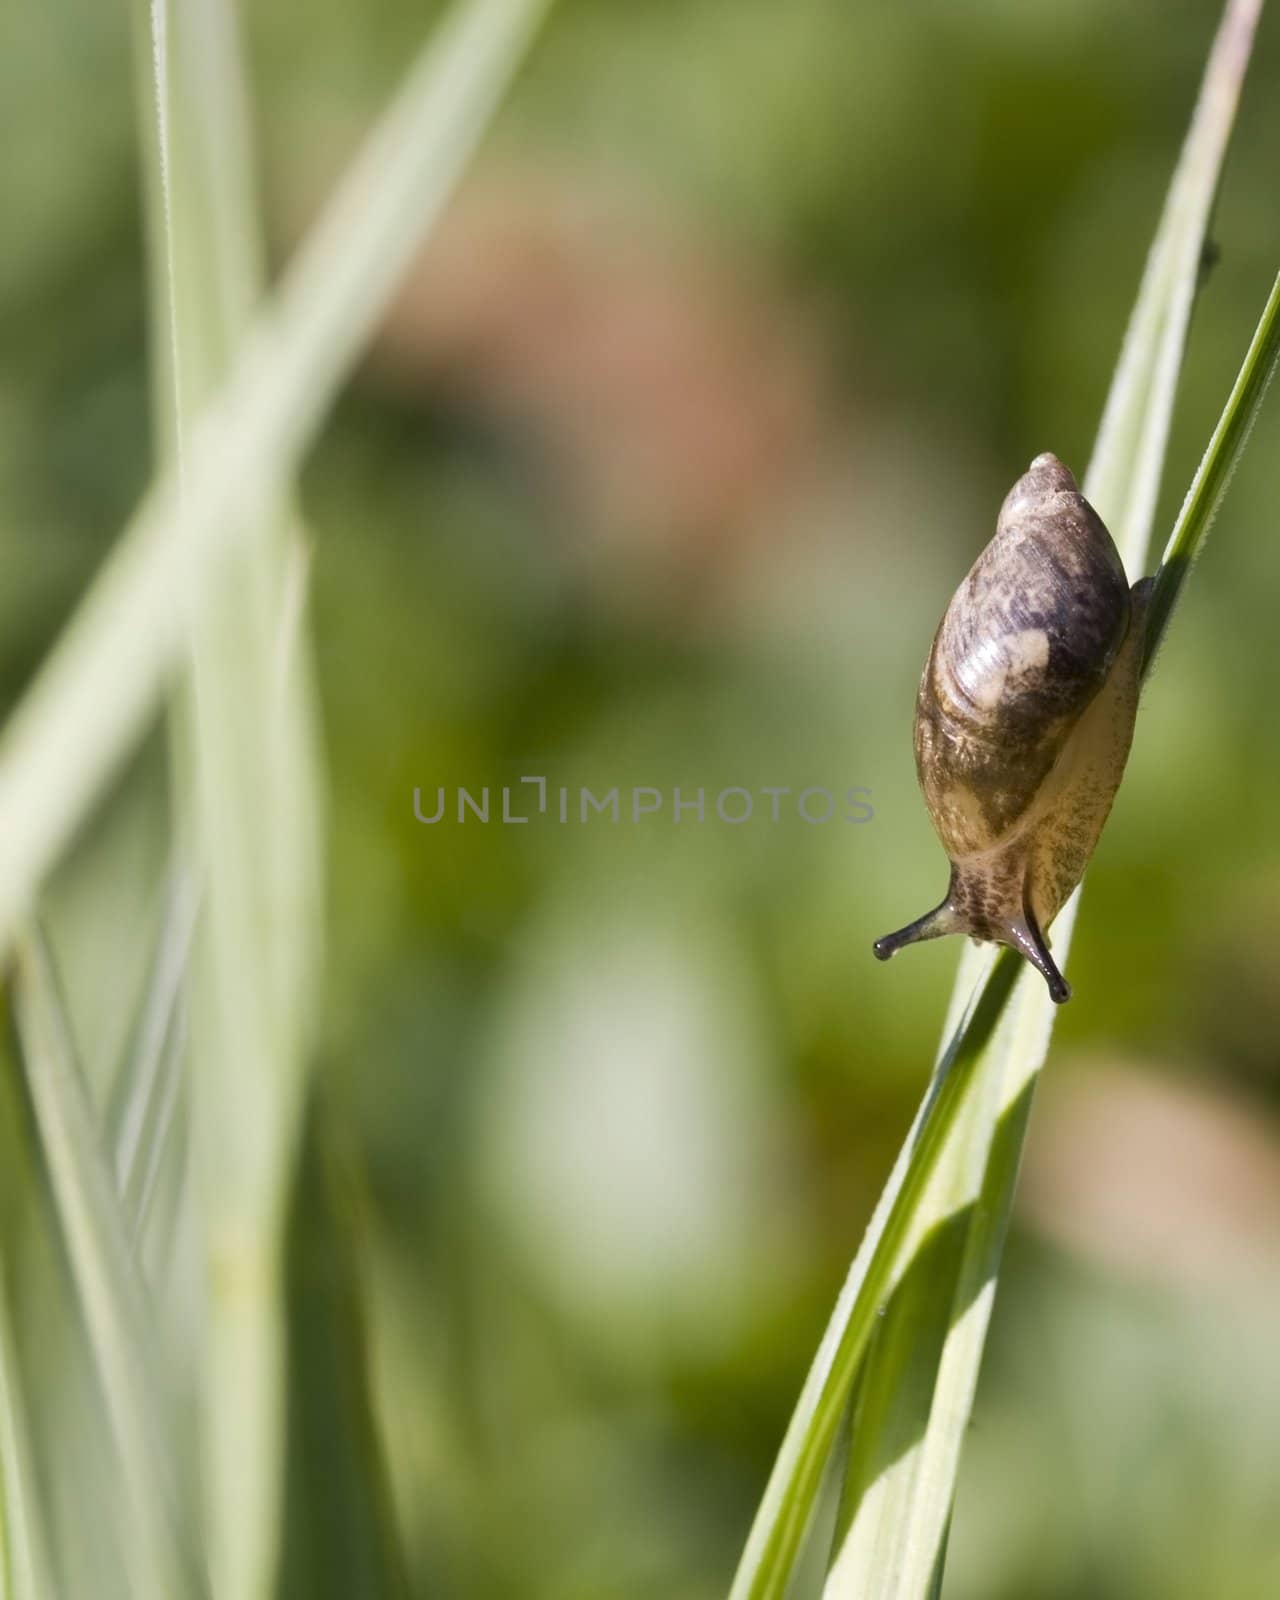 A garden snail perched on a blade of grass.